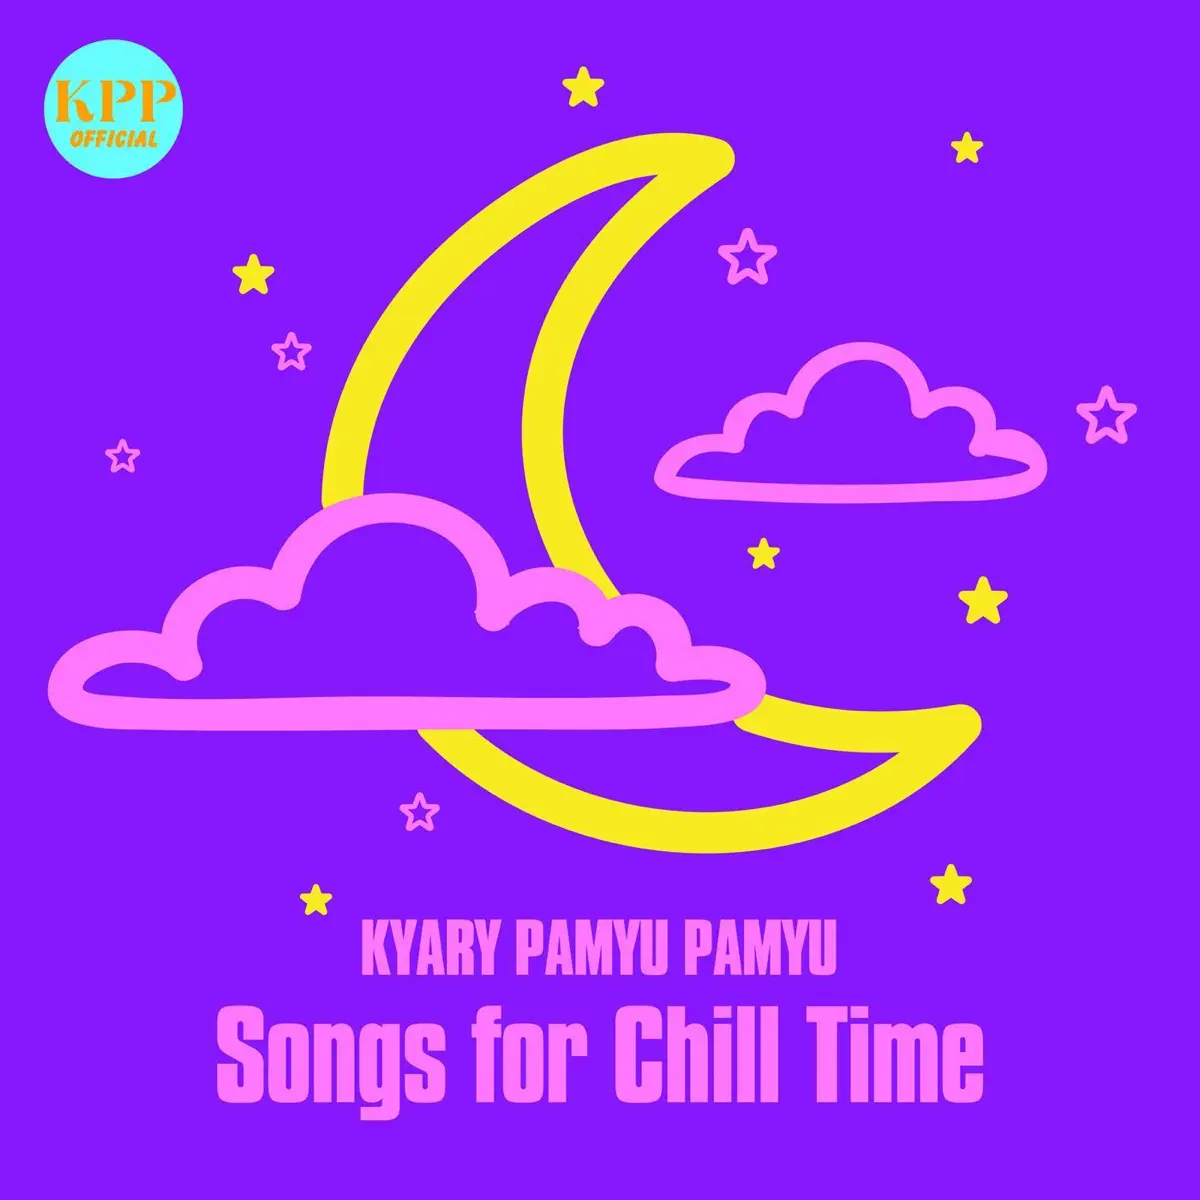 Kyary Pamyu Pamyu - Kyary Pamyu Pamyu Songs for Chill Time - EP (2022) [iTunes Match AAC M4A]-新房子